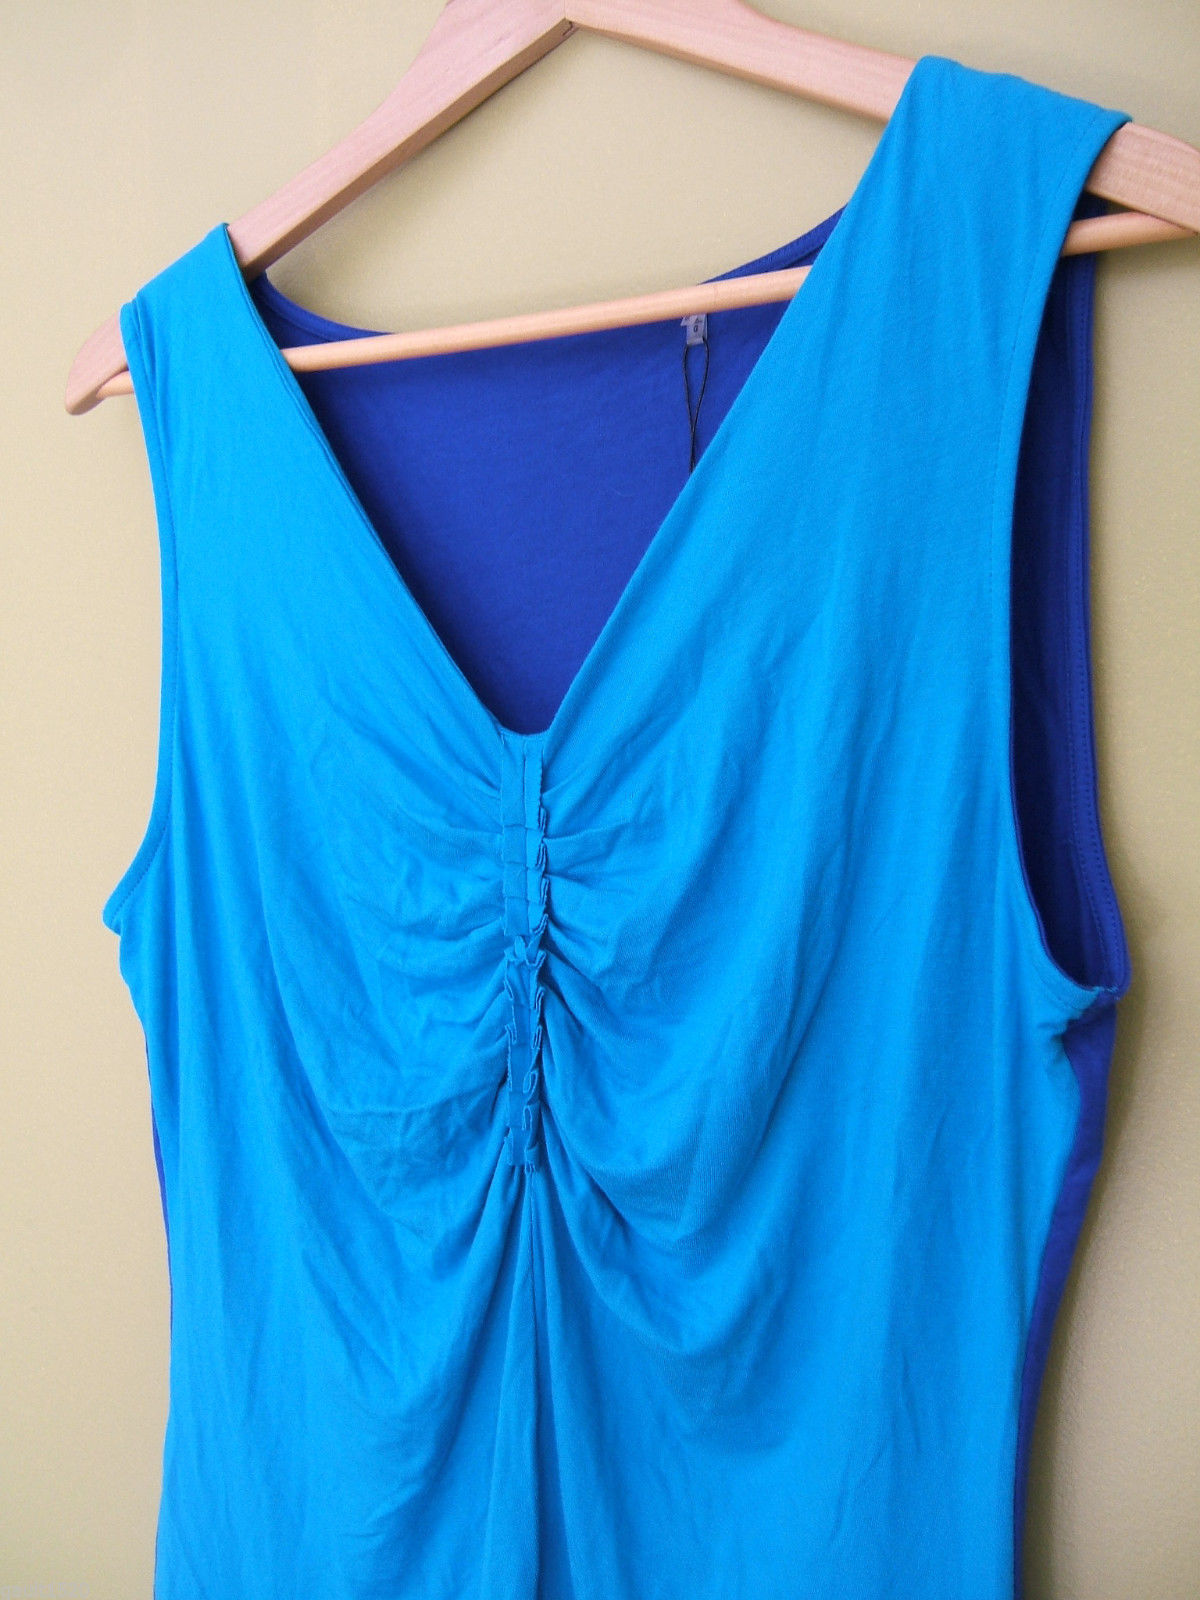 NWT Tahari Designer Doris Knit Blouse Scuba Blue Lagoon Gathered Top L $78 - $34.80